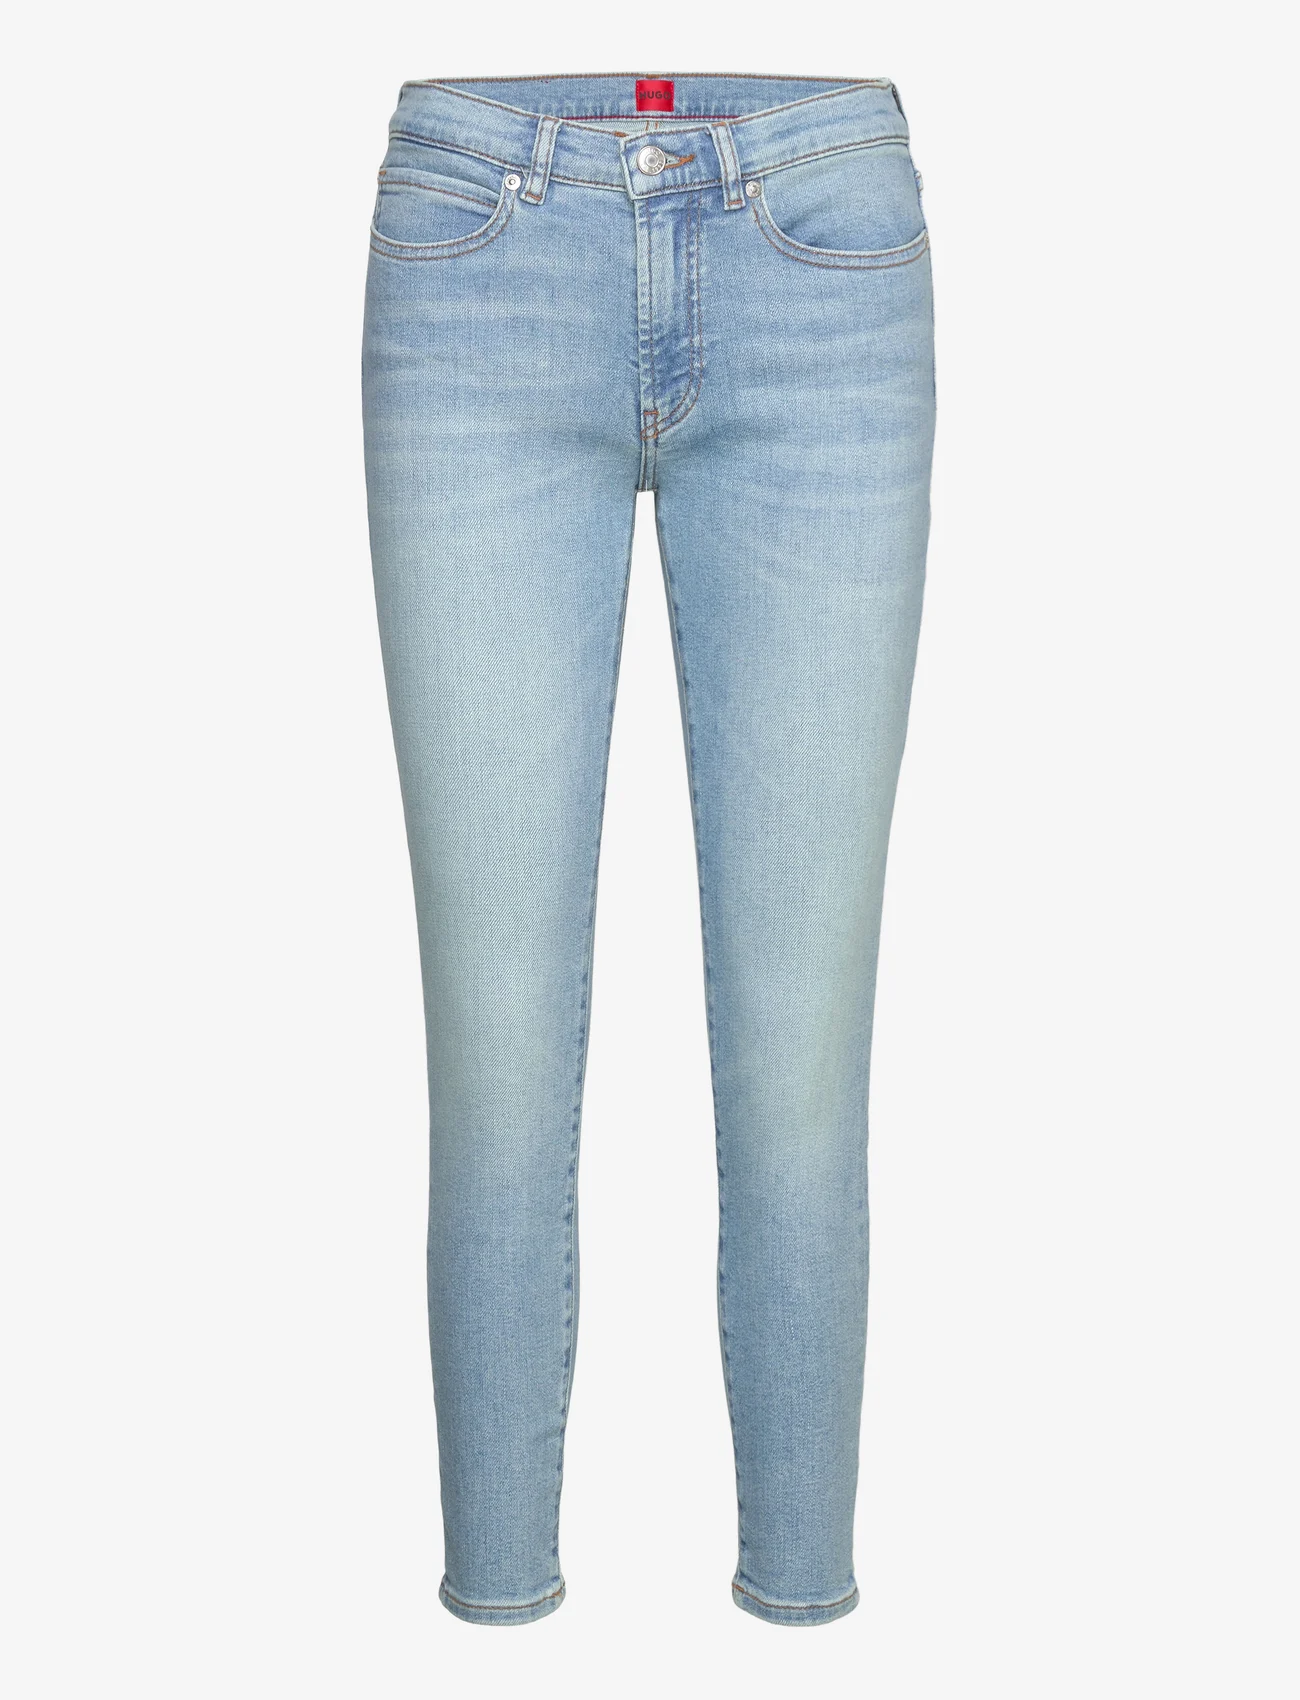 HUGO - 932 - jeans skinny - turquoise/aqua - 0